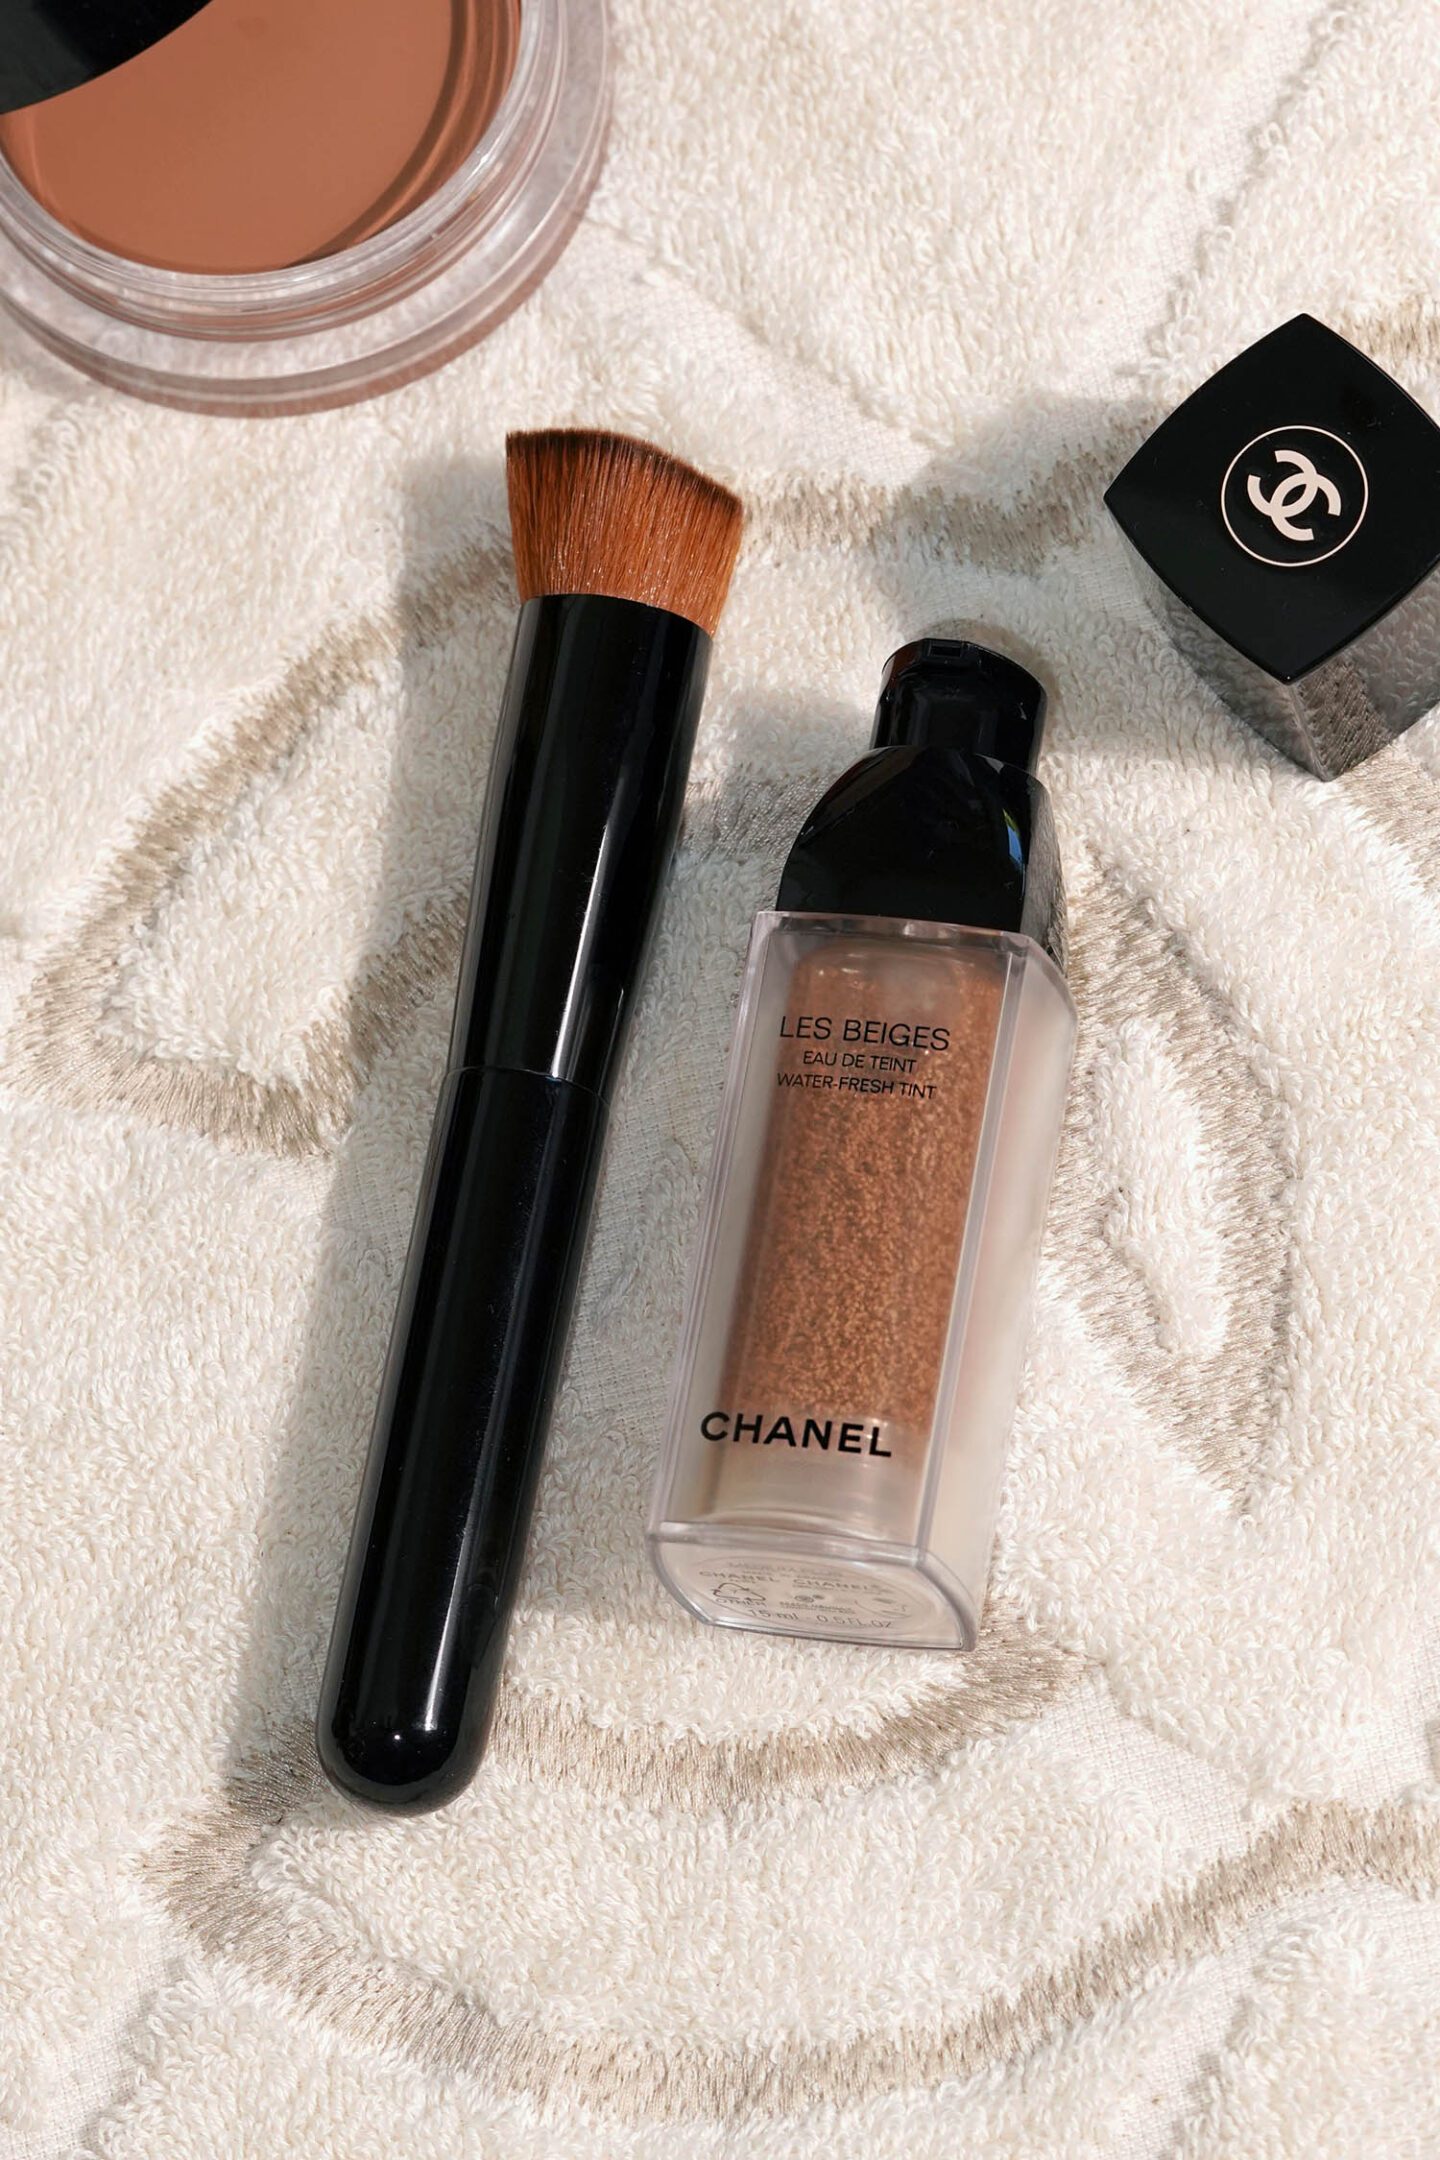 Chanel Les Beiges Water-Fresh Tint in Medium Plus